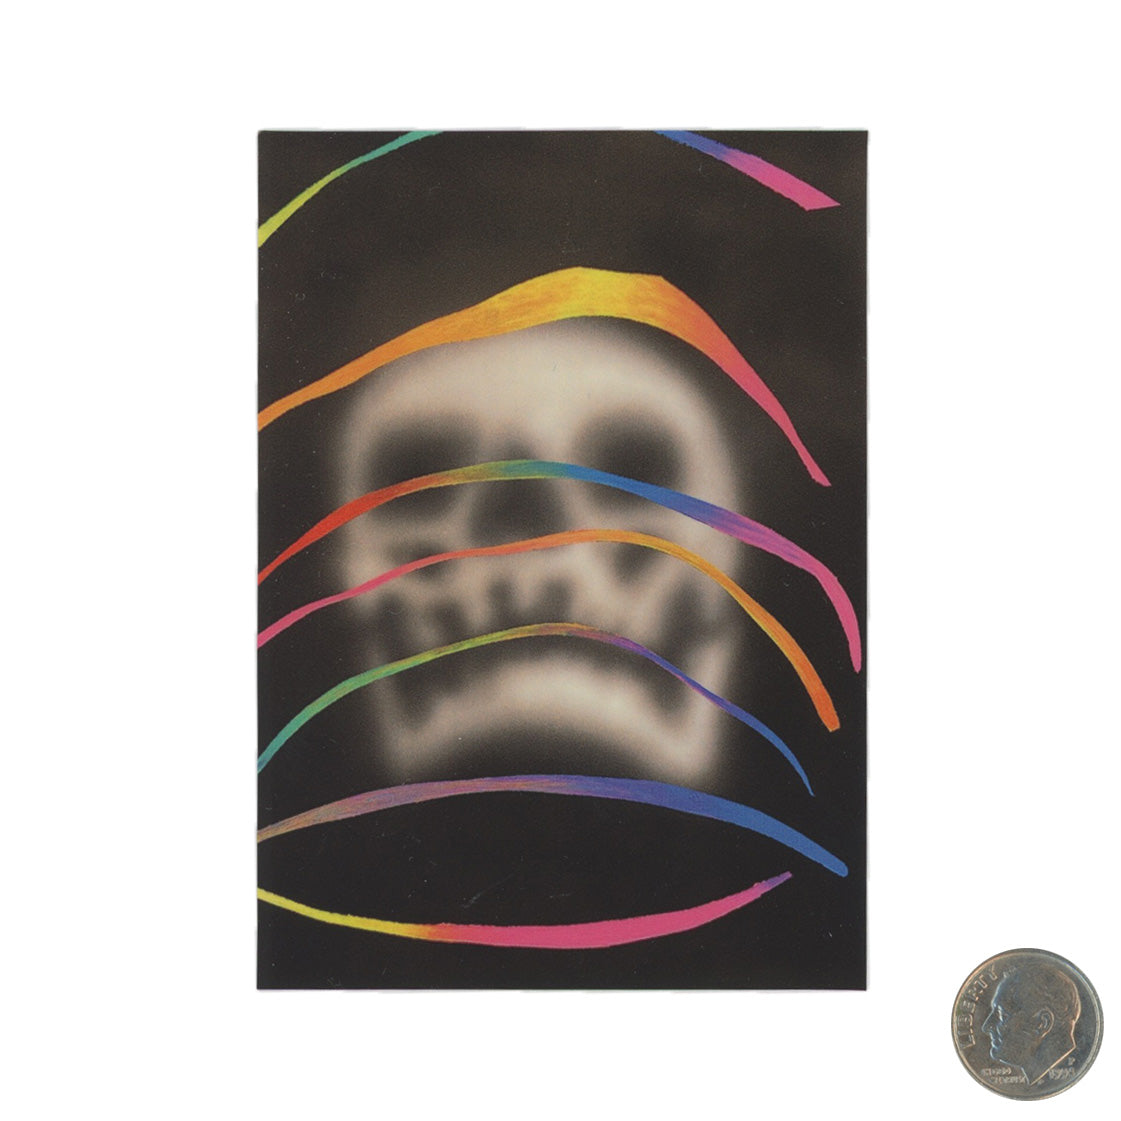 Erik Foss Blurry Skull Sticker with dime